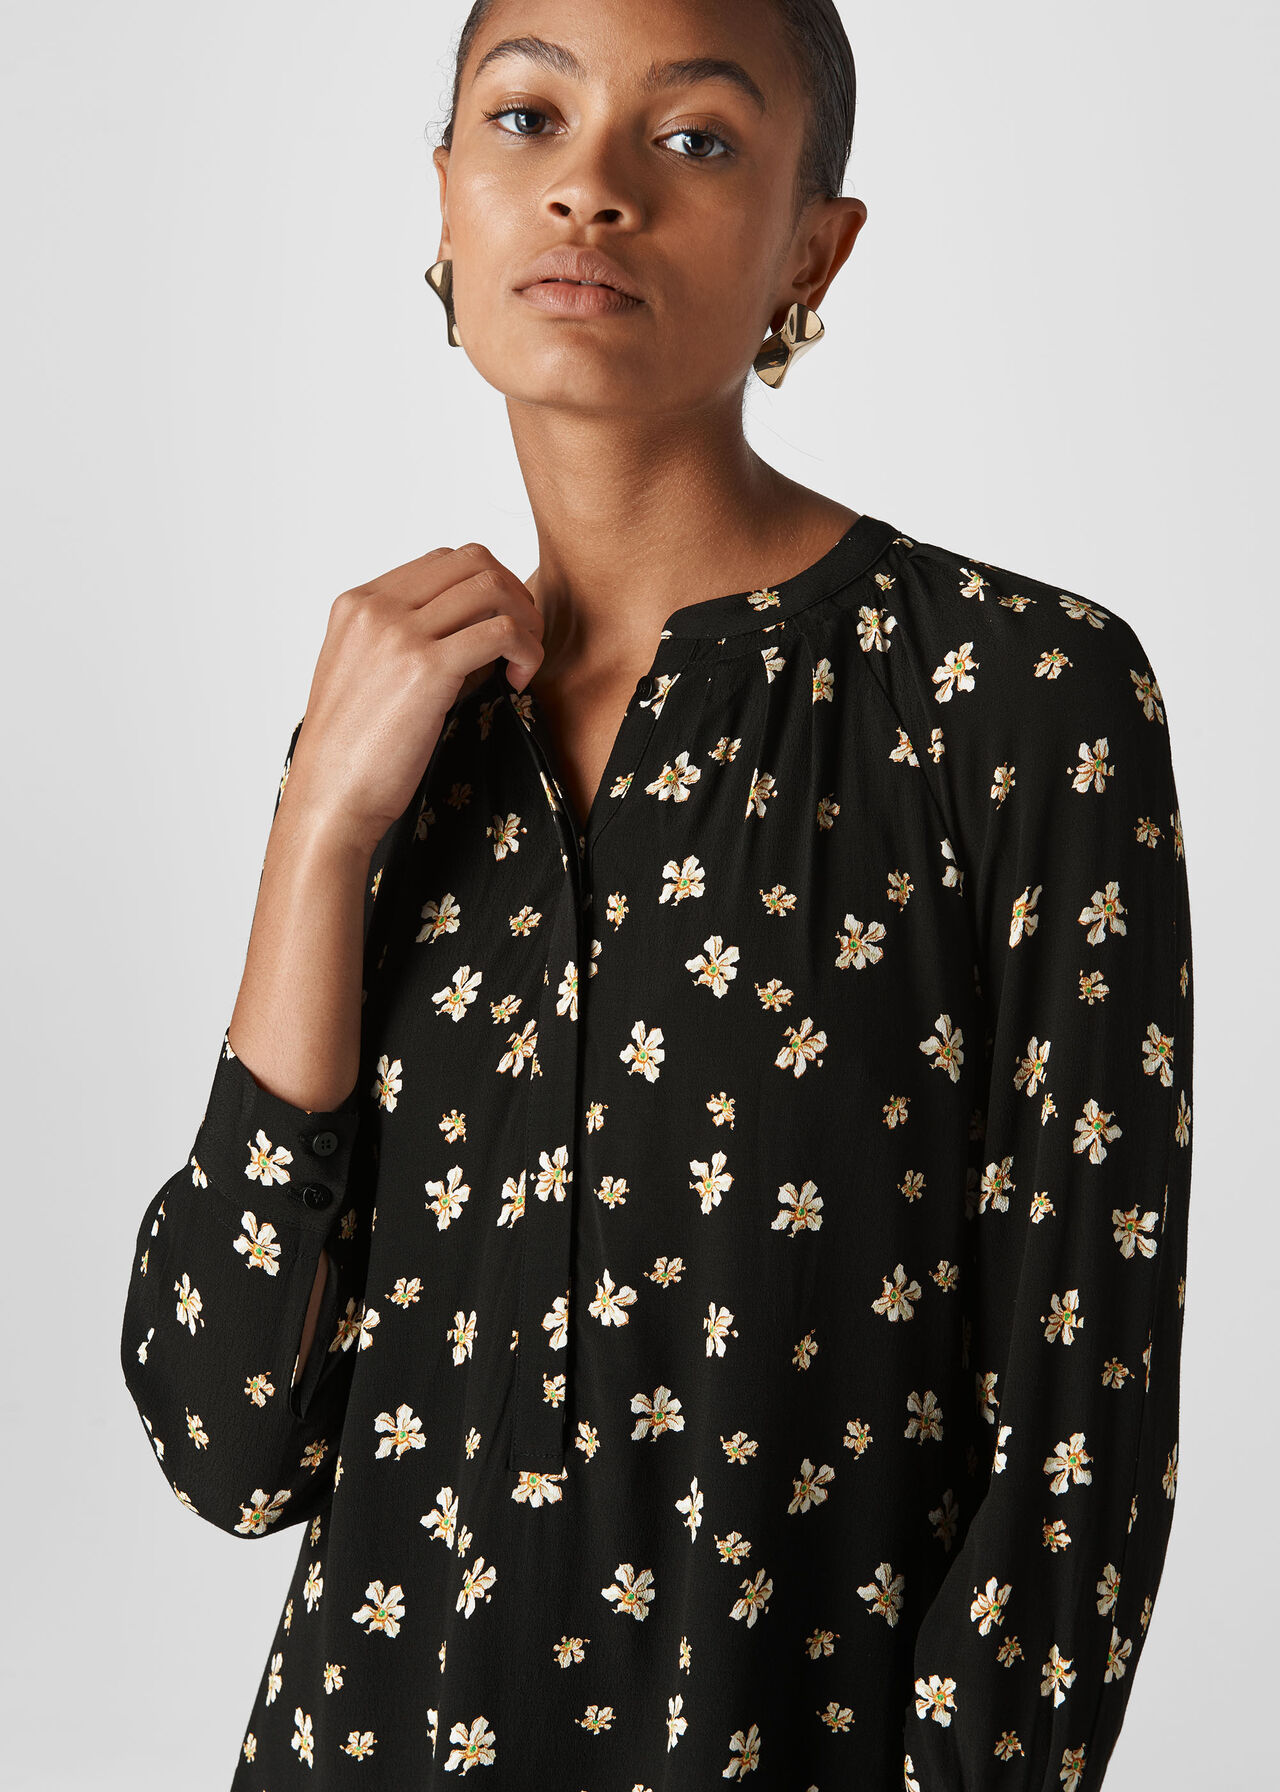 Edelweiss Print Shirt Dress Black/Multi